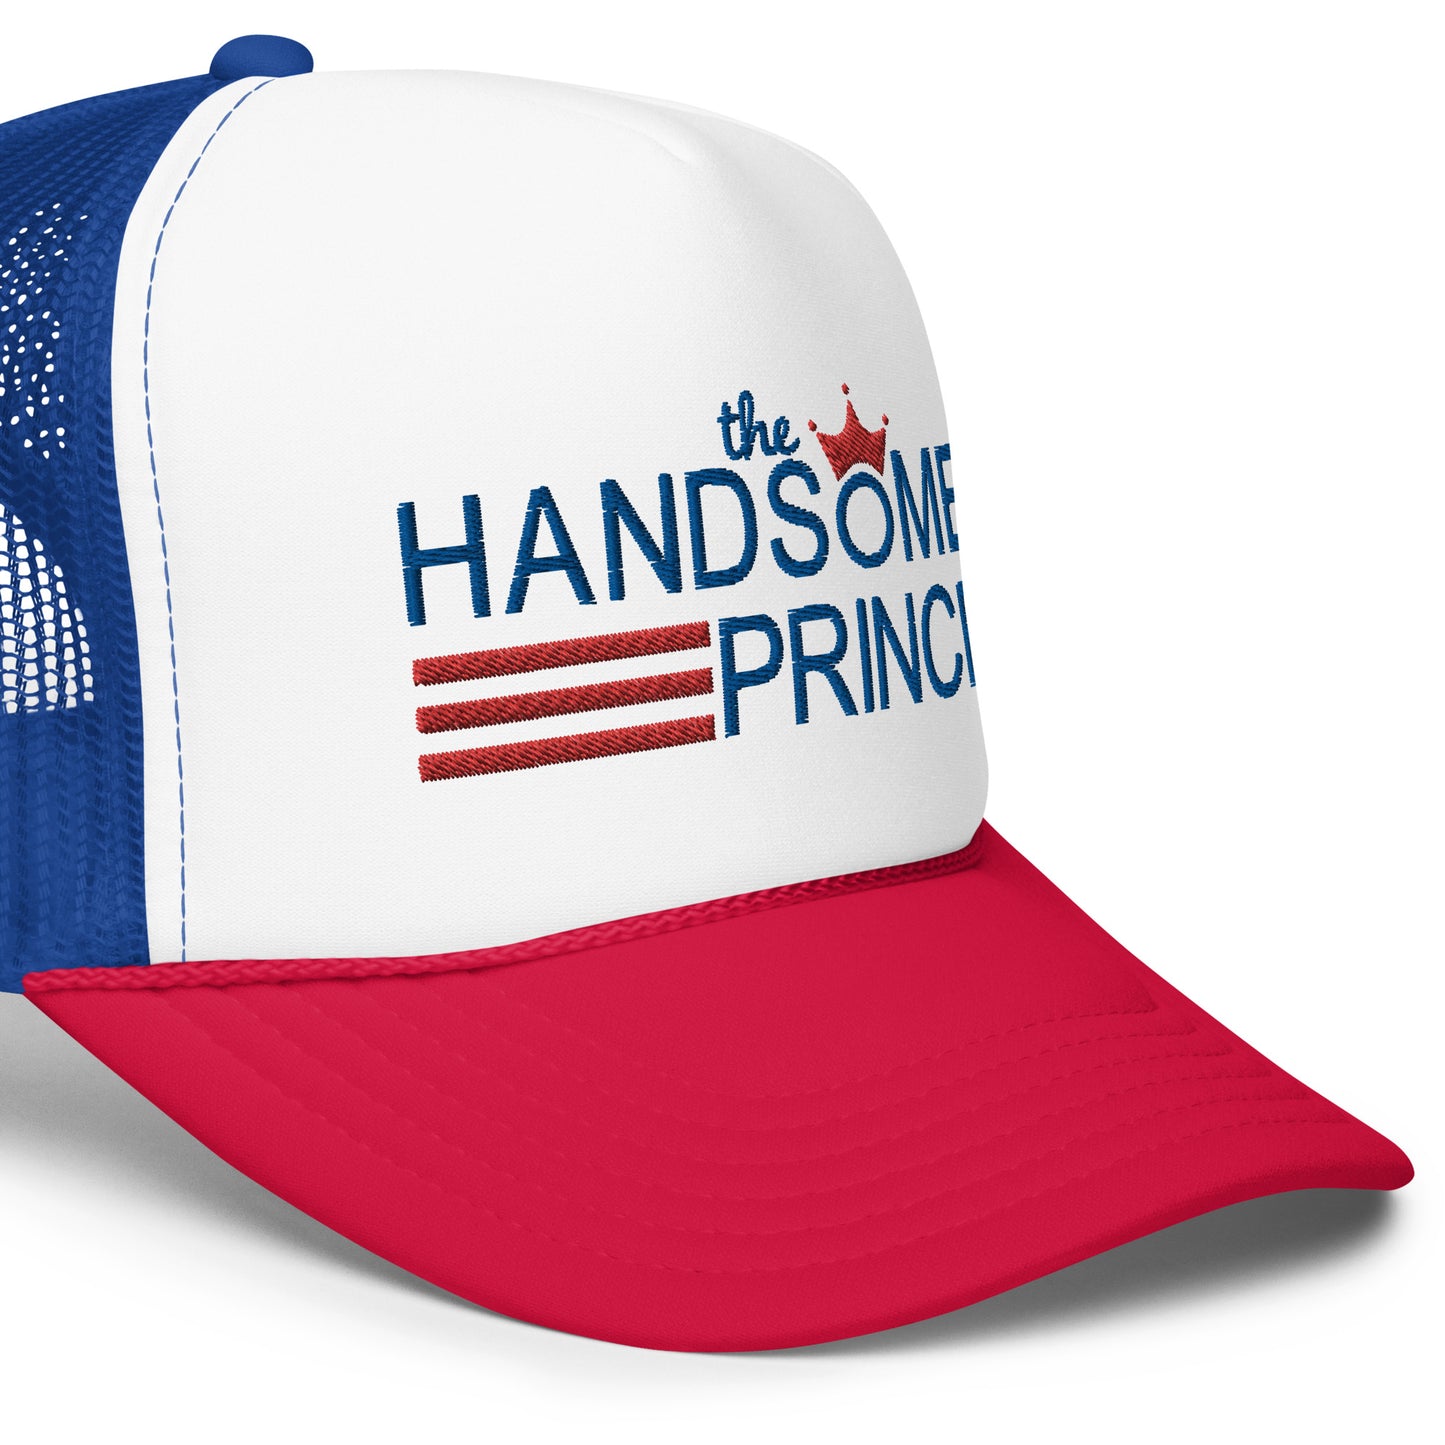 Handsome Prince Trucker Hat